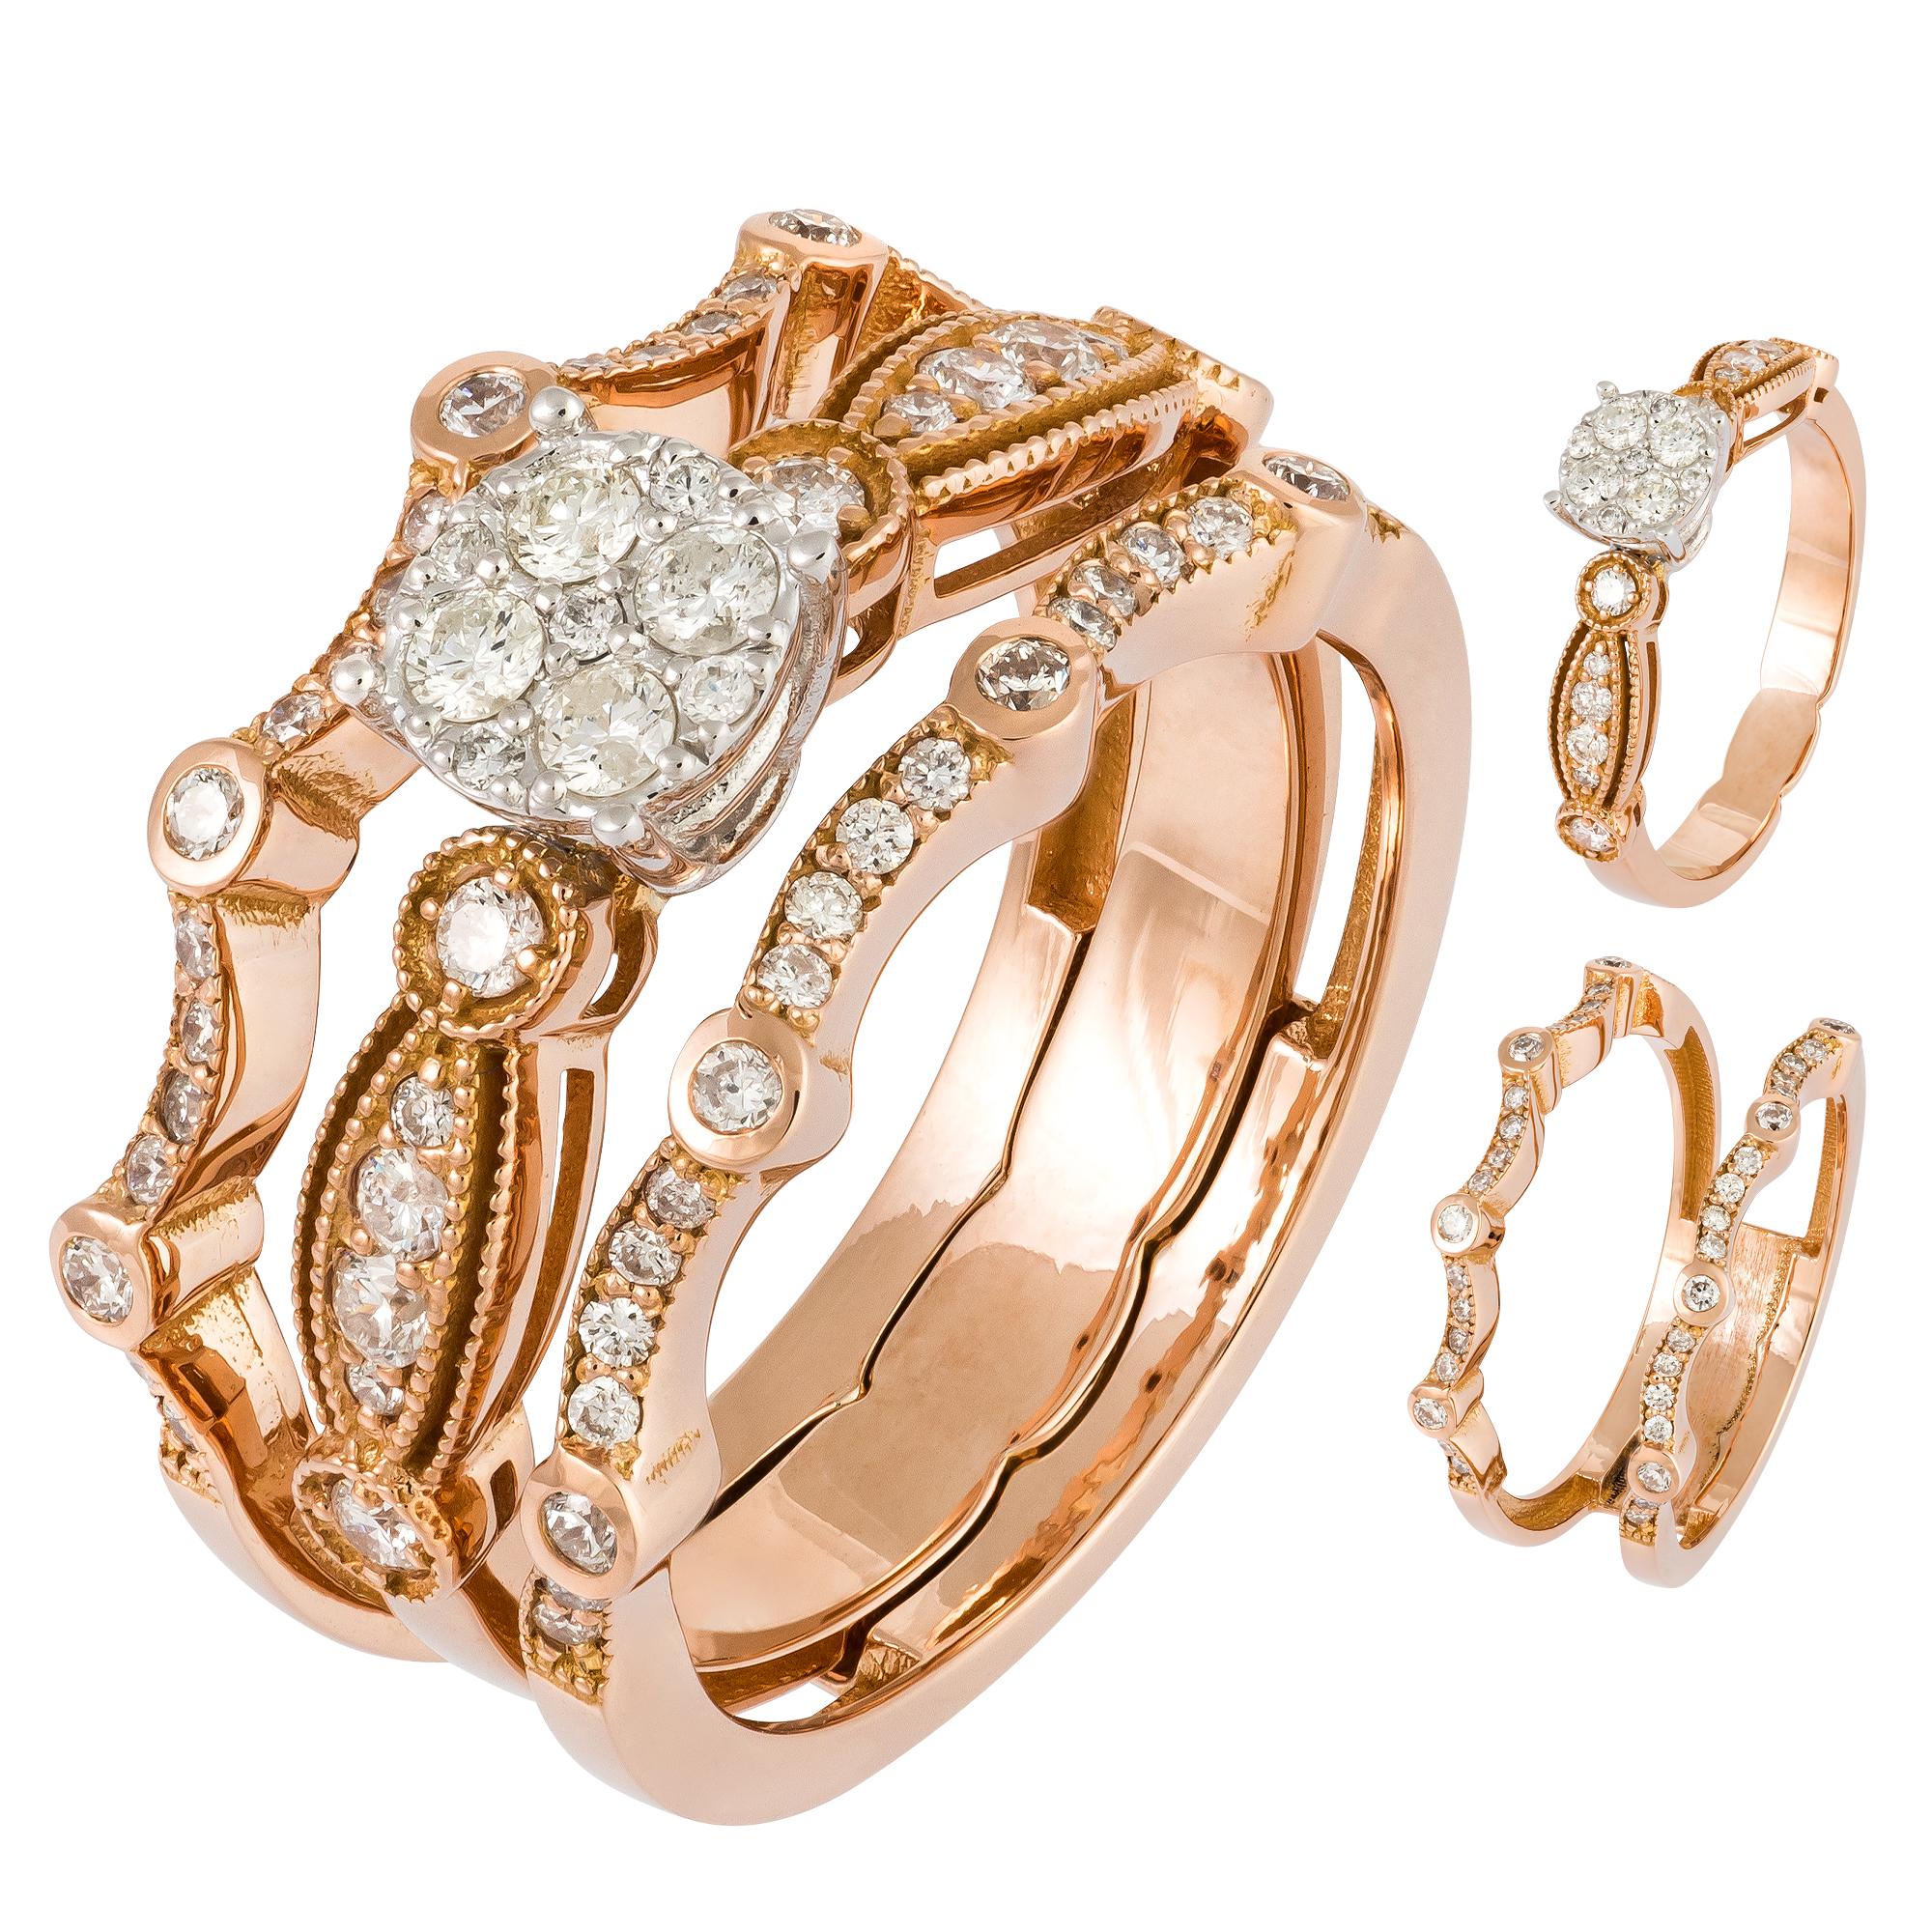 For Sale:  Impressive Pink 18K Gold White Diamond Ring For Her 2